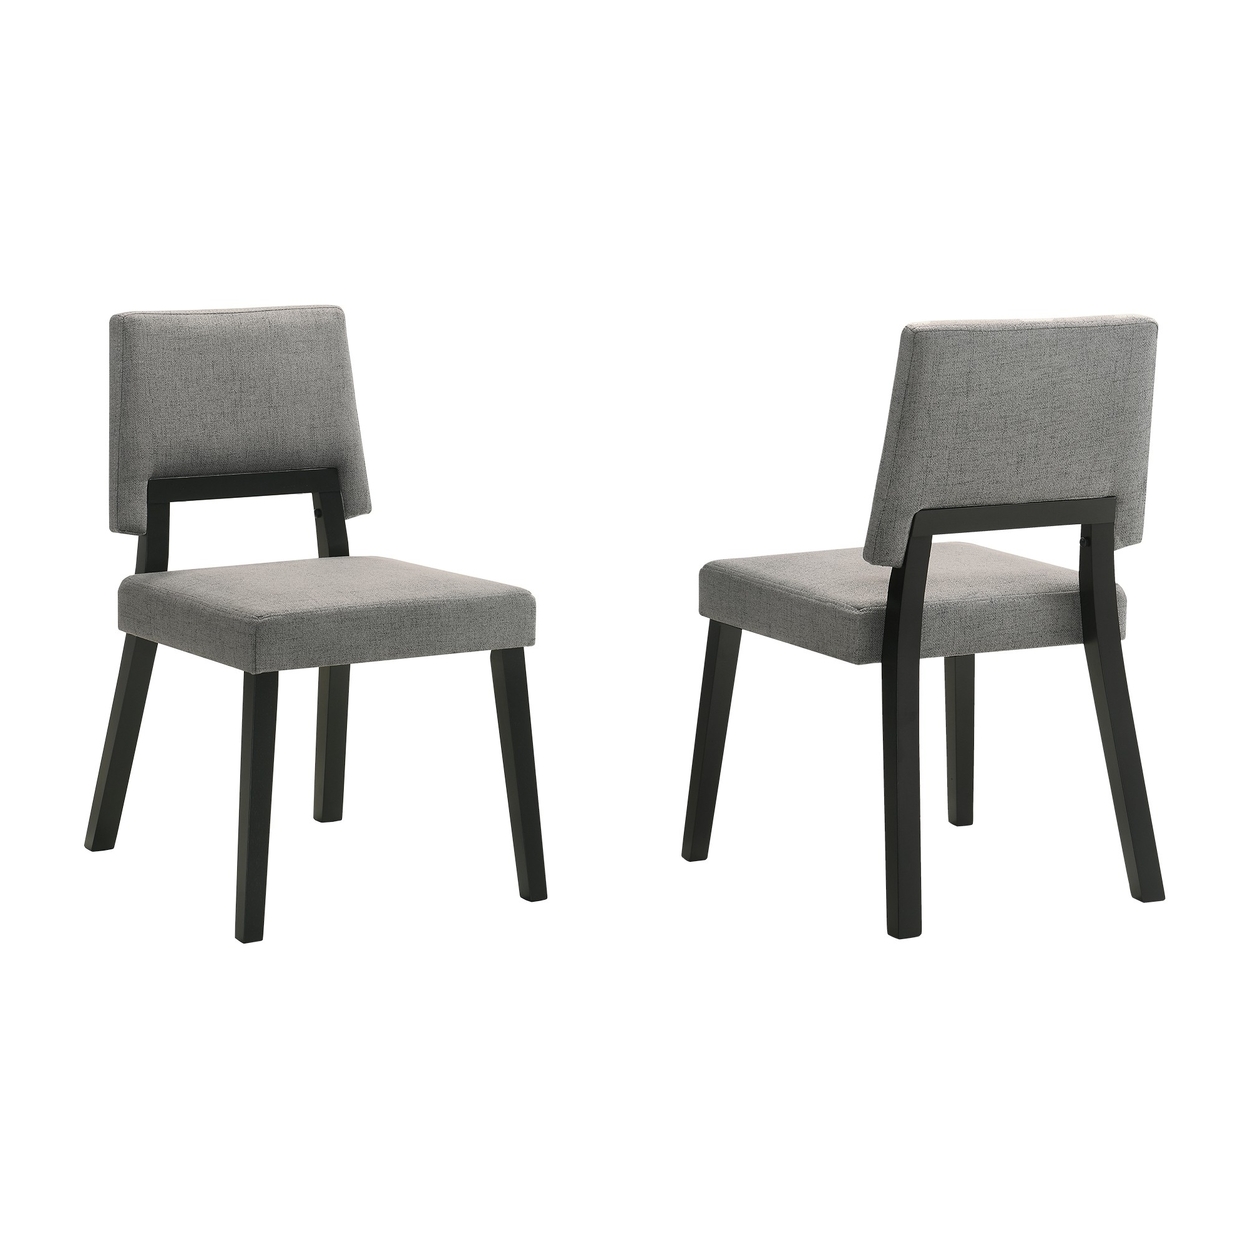 Yumi 23 Inch Dining Chair, Set Of 2, Charcoal Gray Fabric Seat, Black - Saltoro Sherpi